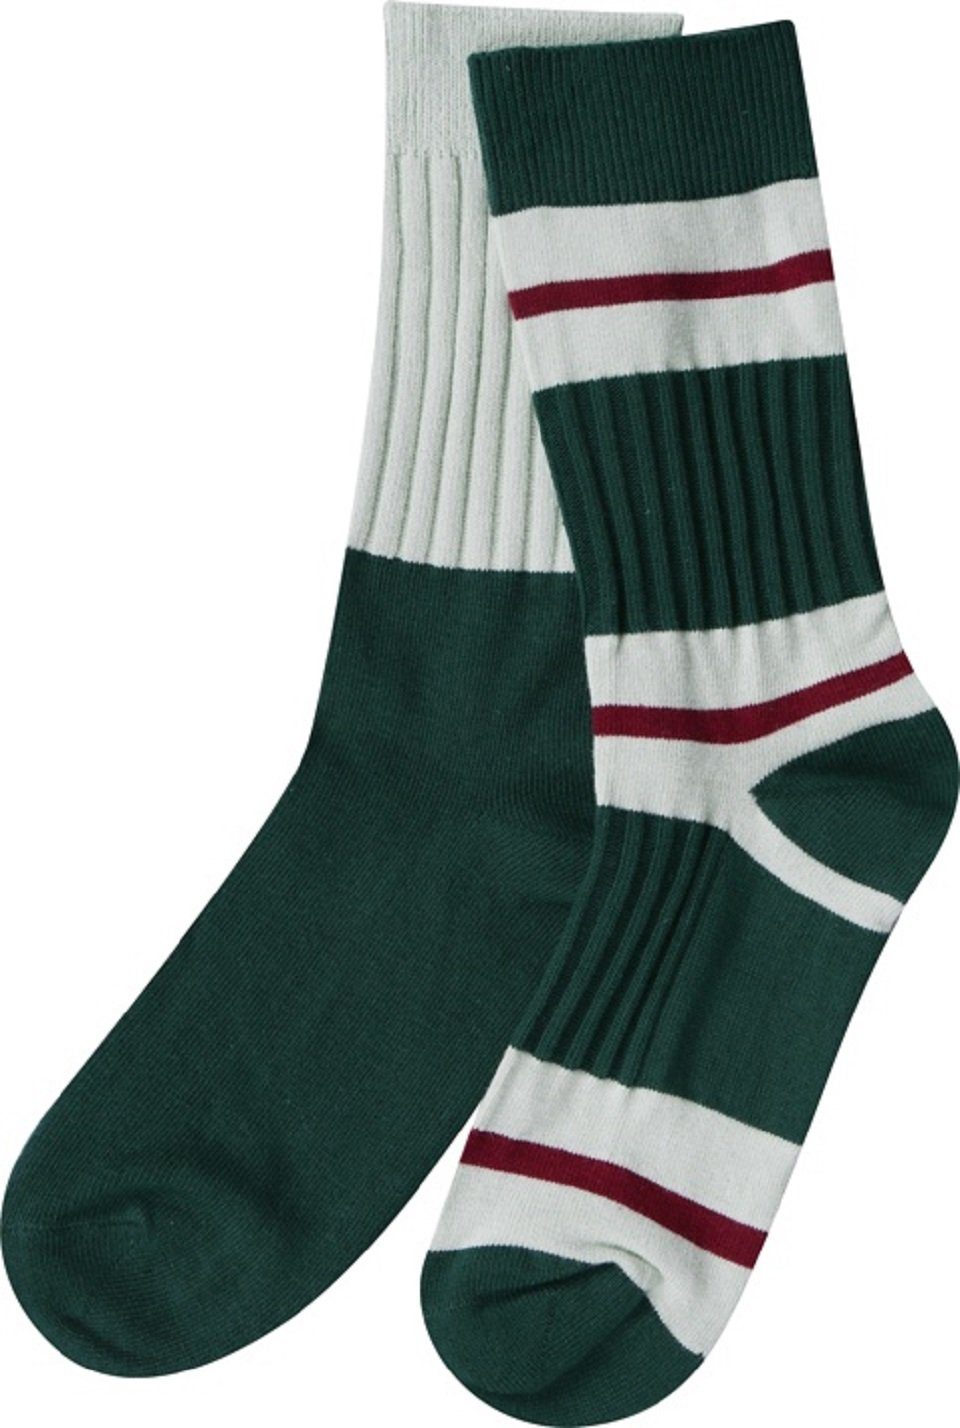 Capelli New York Socken 2x Unisex Socken grün